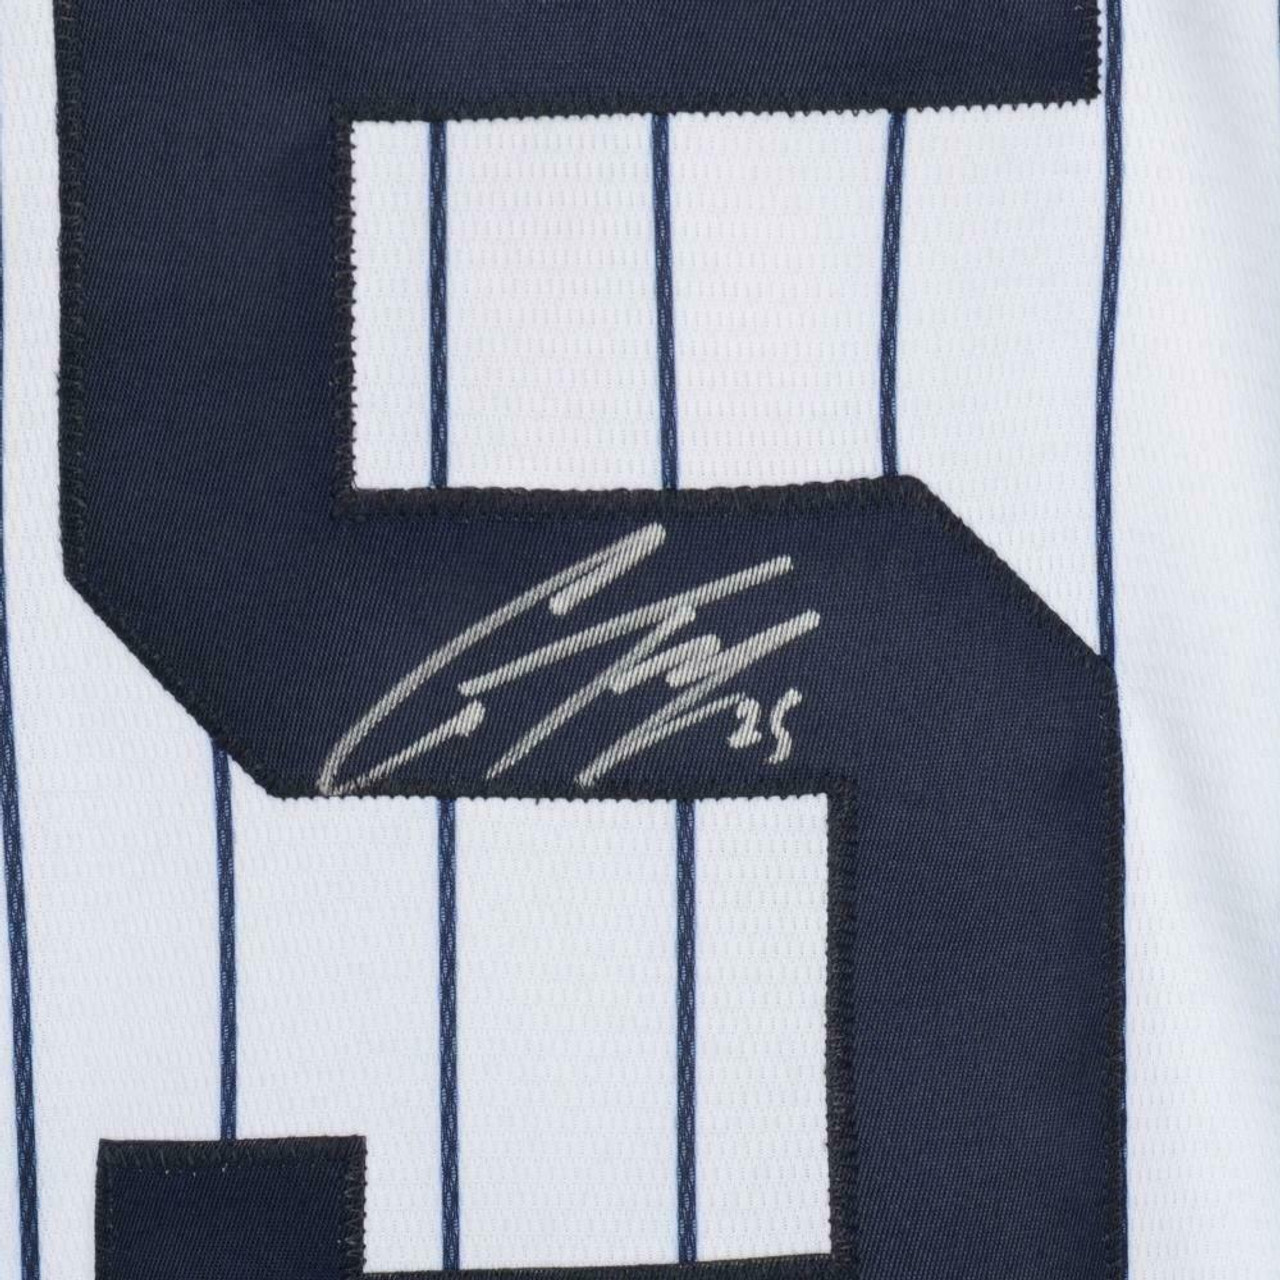 DJ LEMAHIEU Autographed New York Yankees Authentic Nike Pinstripe Jersey  FANATICS